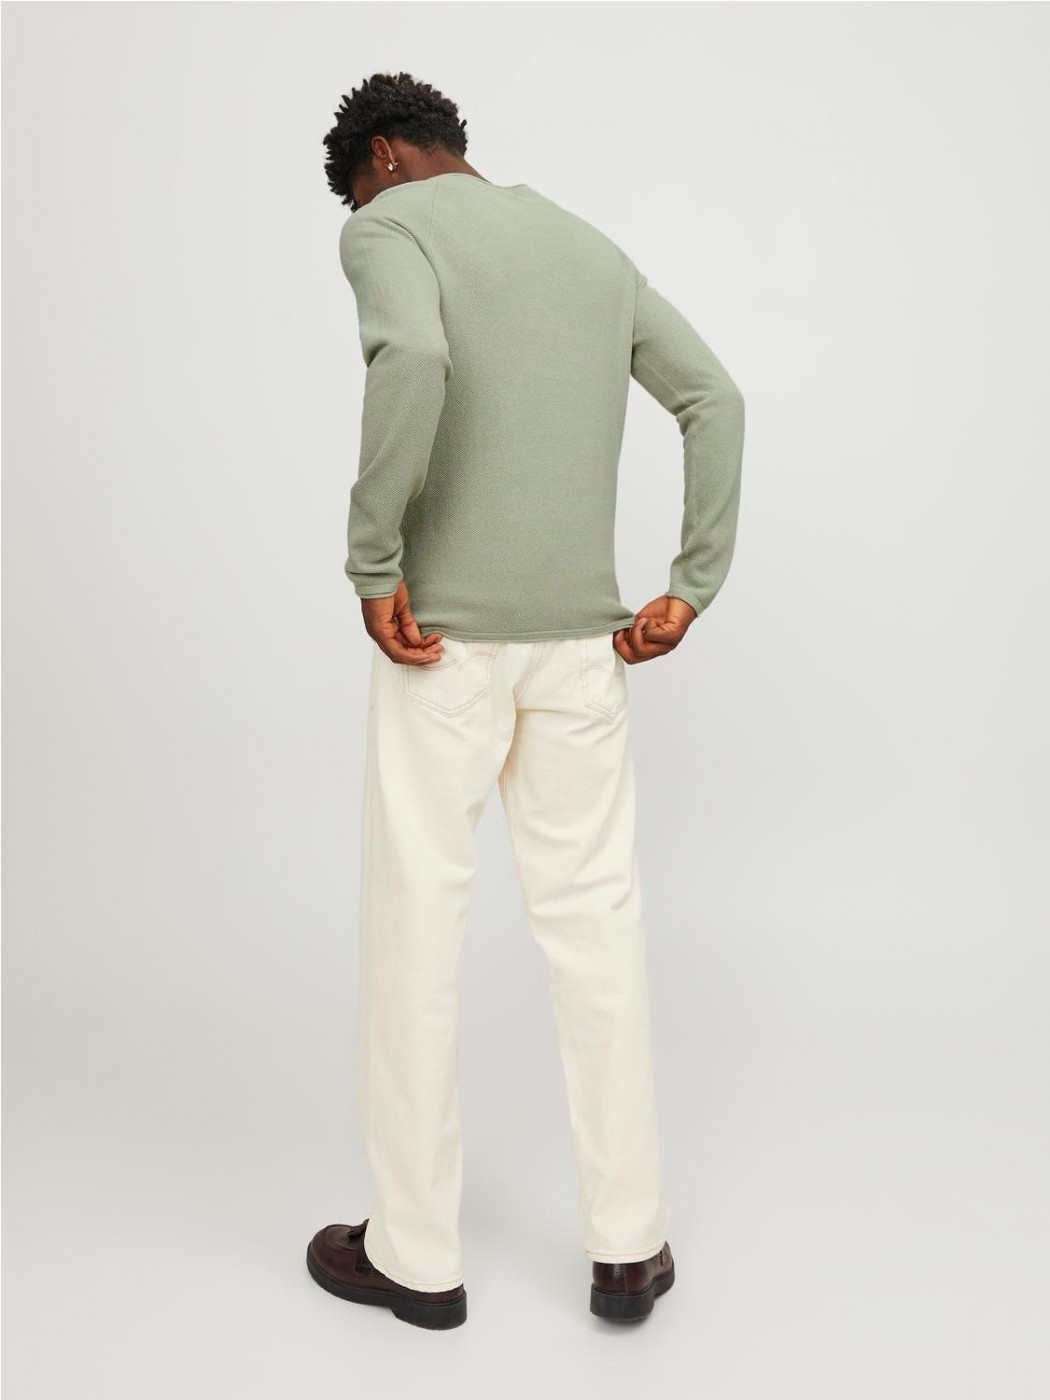 Jersey Hombre Jack & Jones modelo Greg Color Verde Talla 2XL Color VERDE